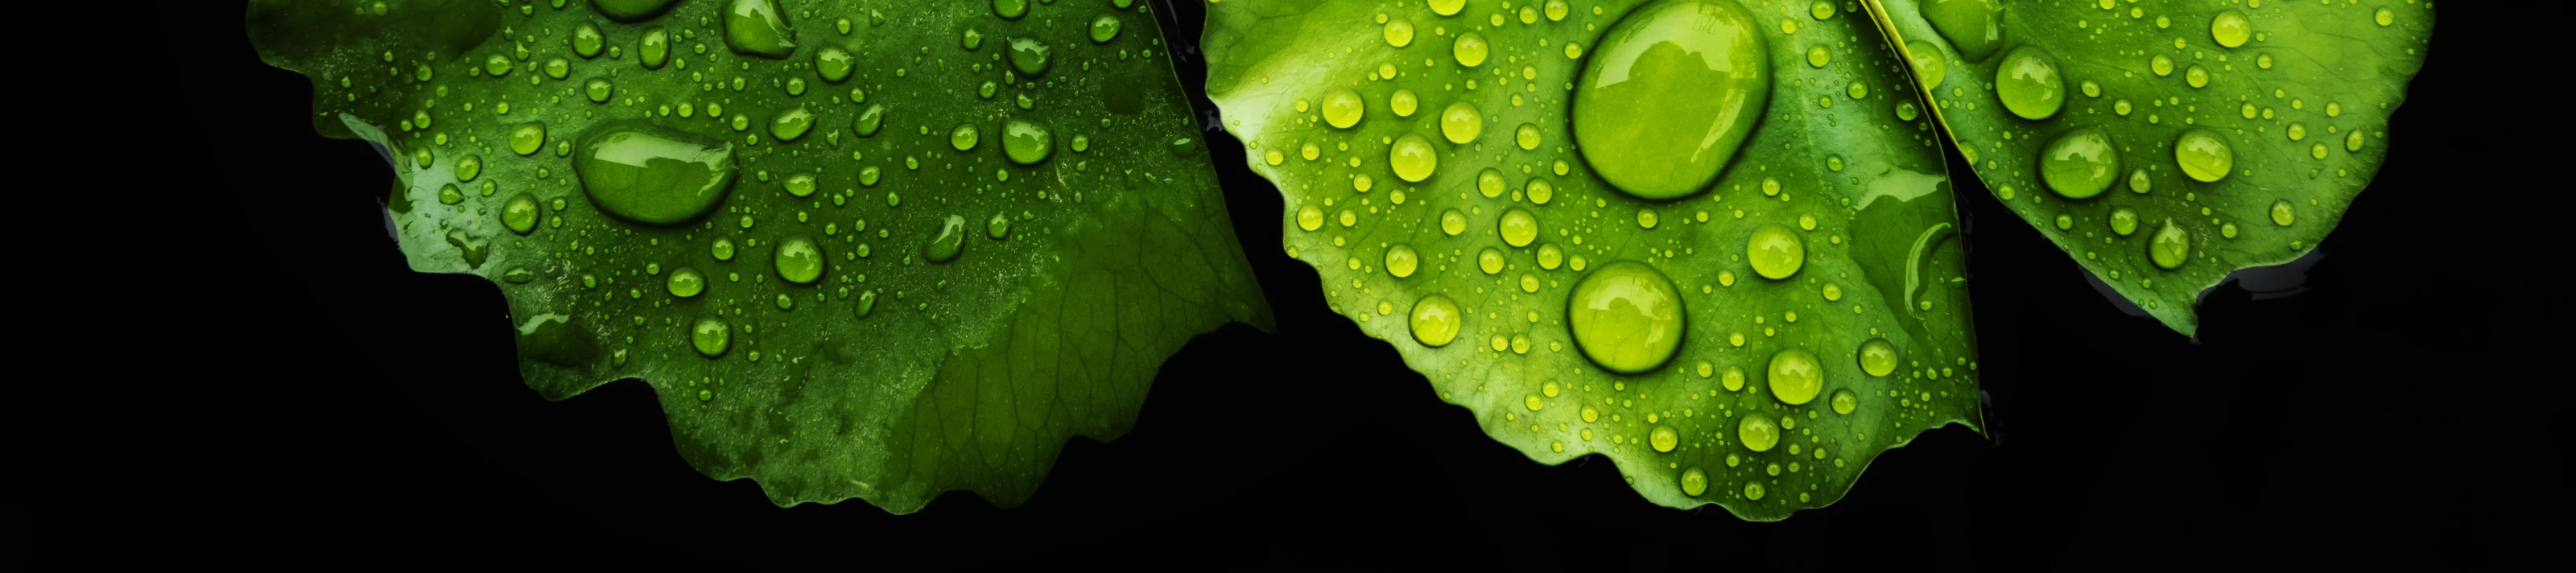 Low key images, Water Droplets on Lotus Leaf